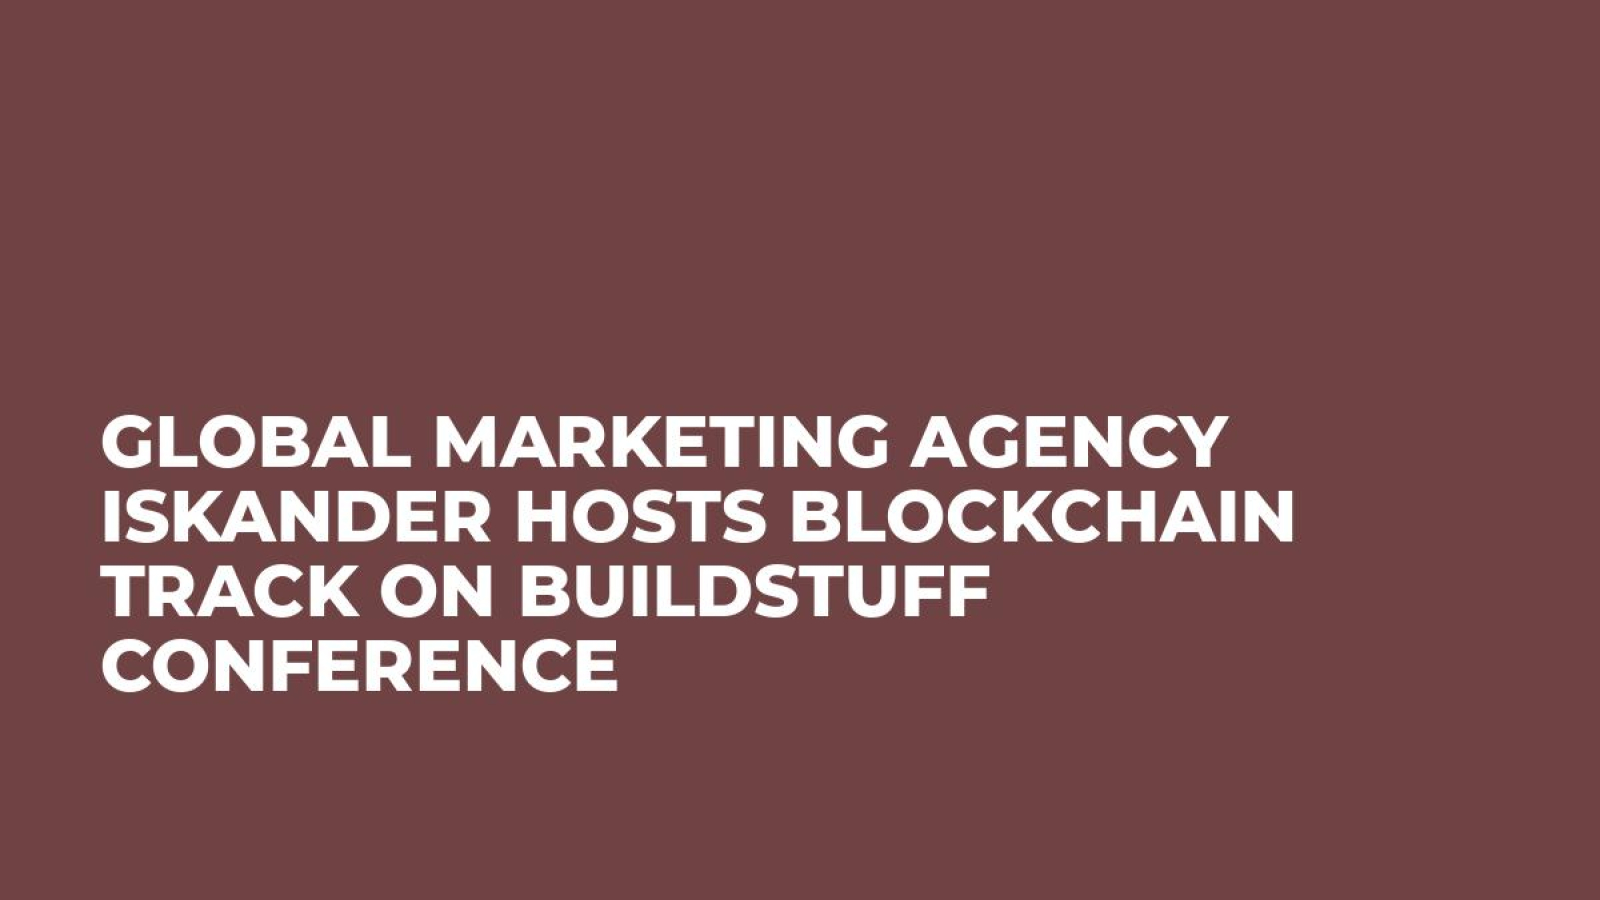 Global marketing agency Iskander hosts Blockchain track on Buildstuff conference